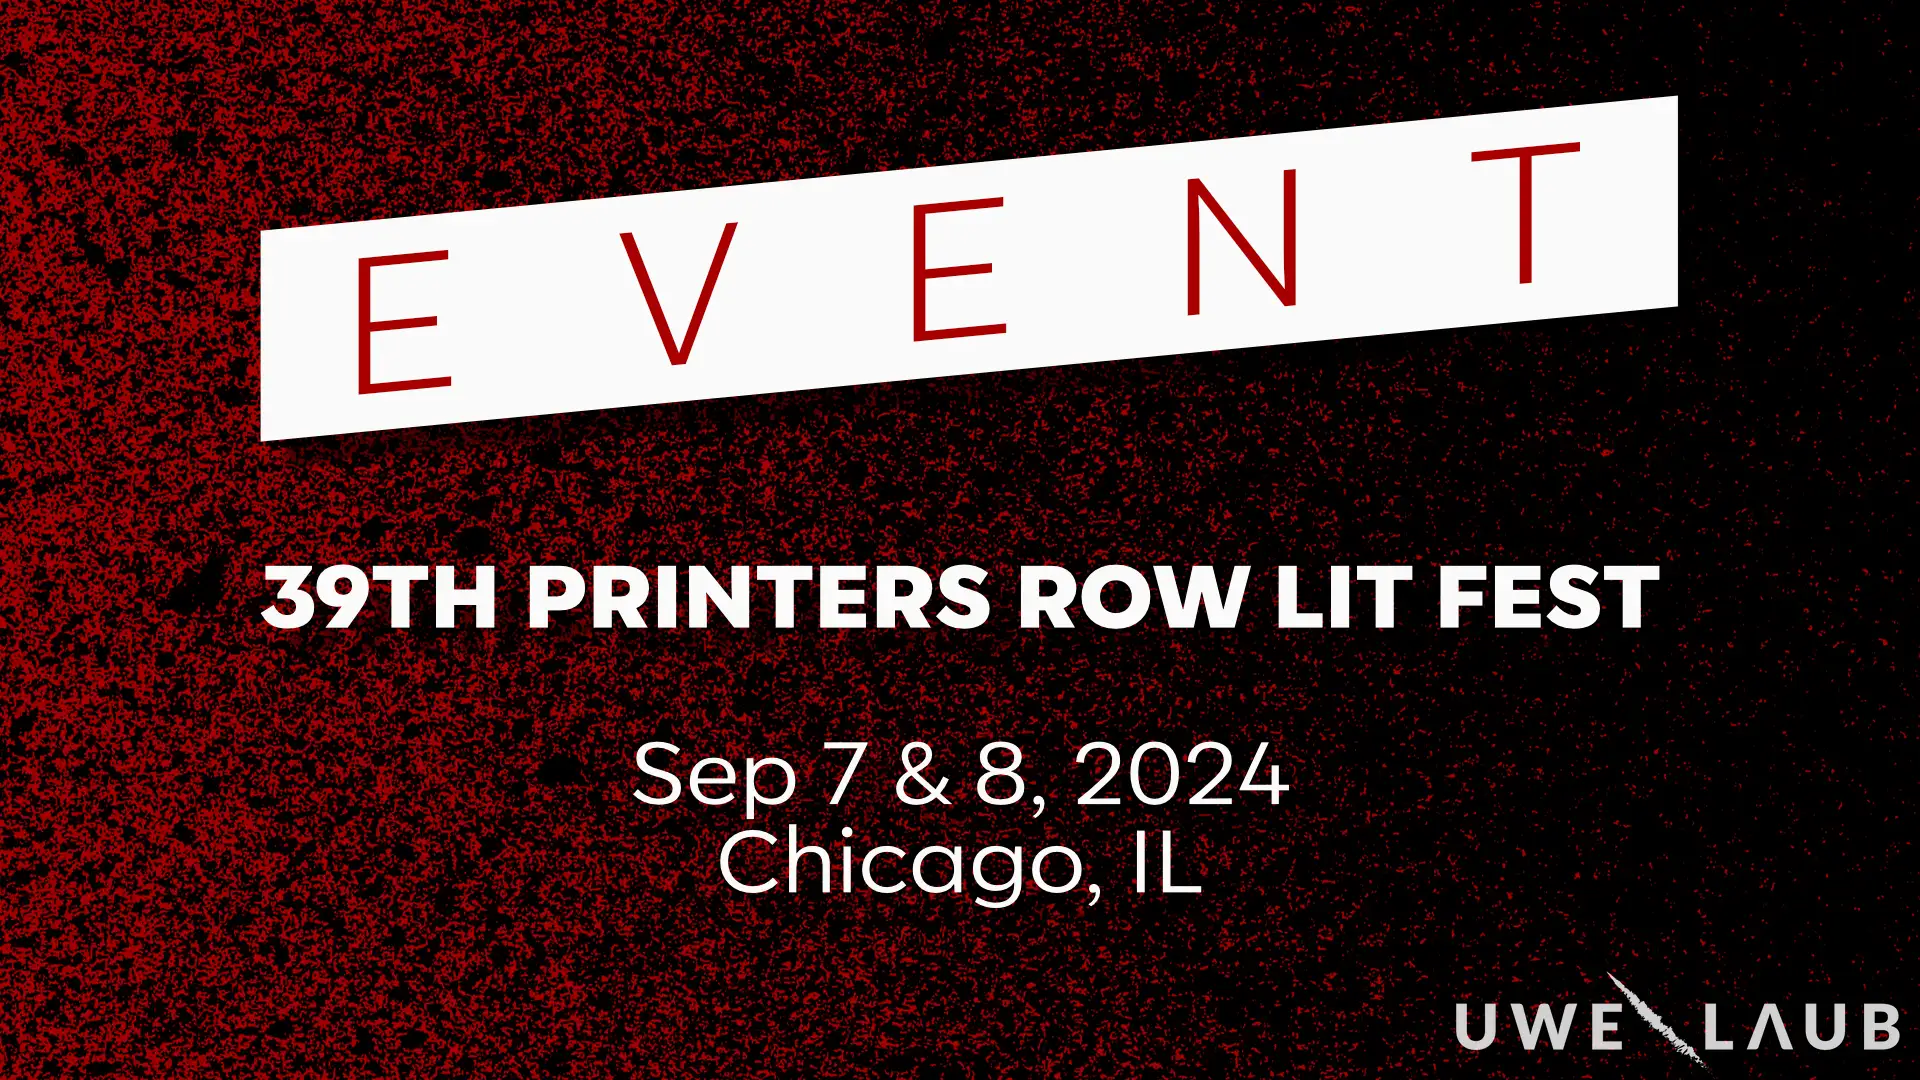 uwe-laub-attending-printers-row-lit-fest-2024-chicago